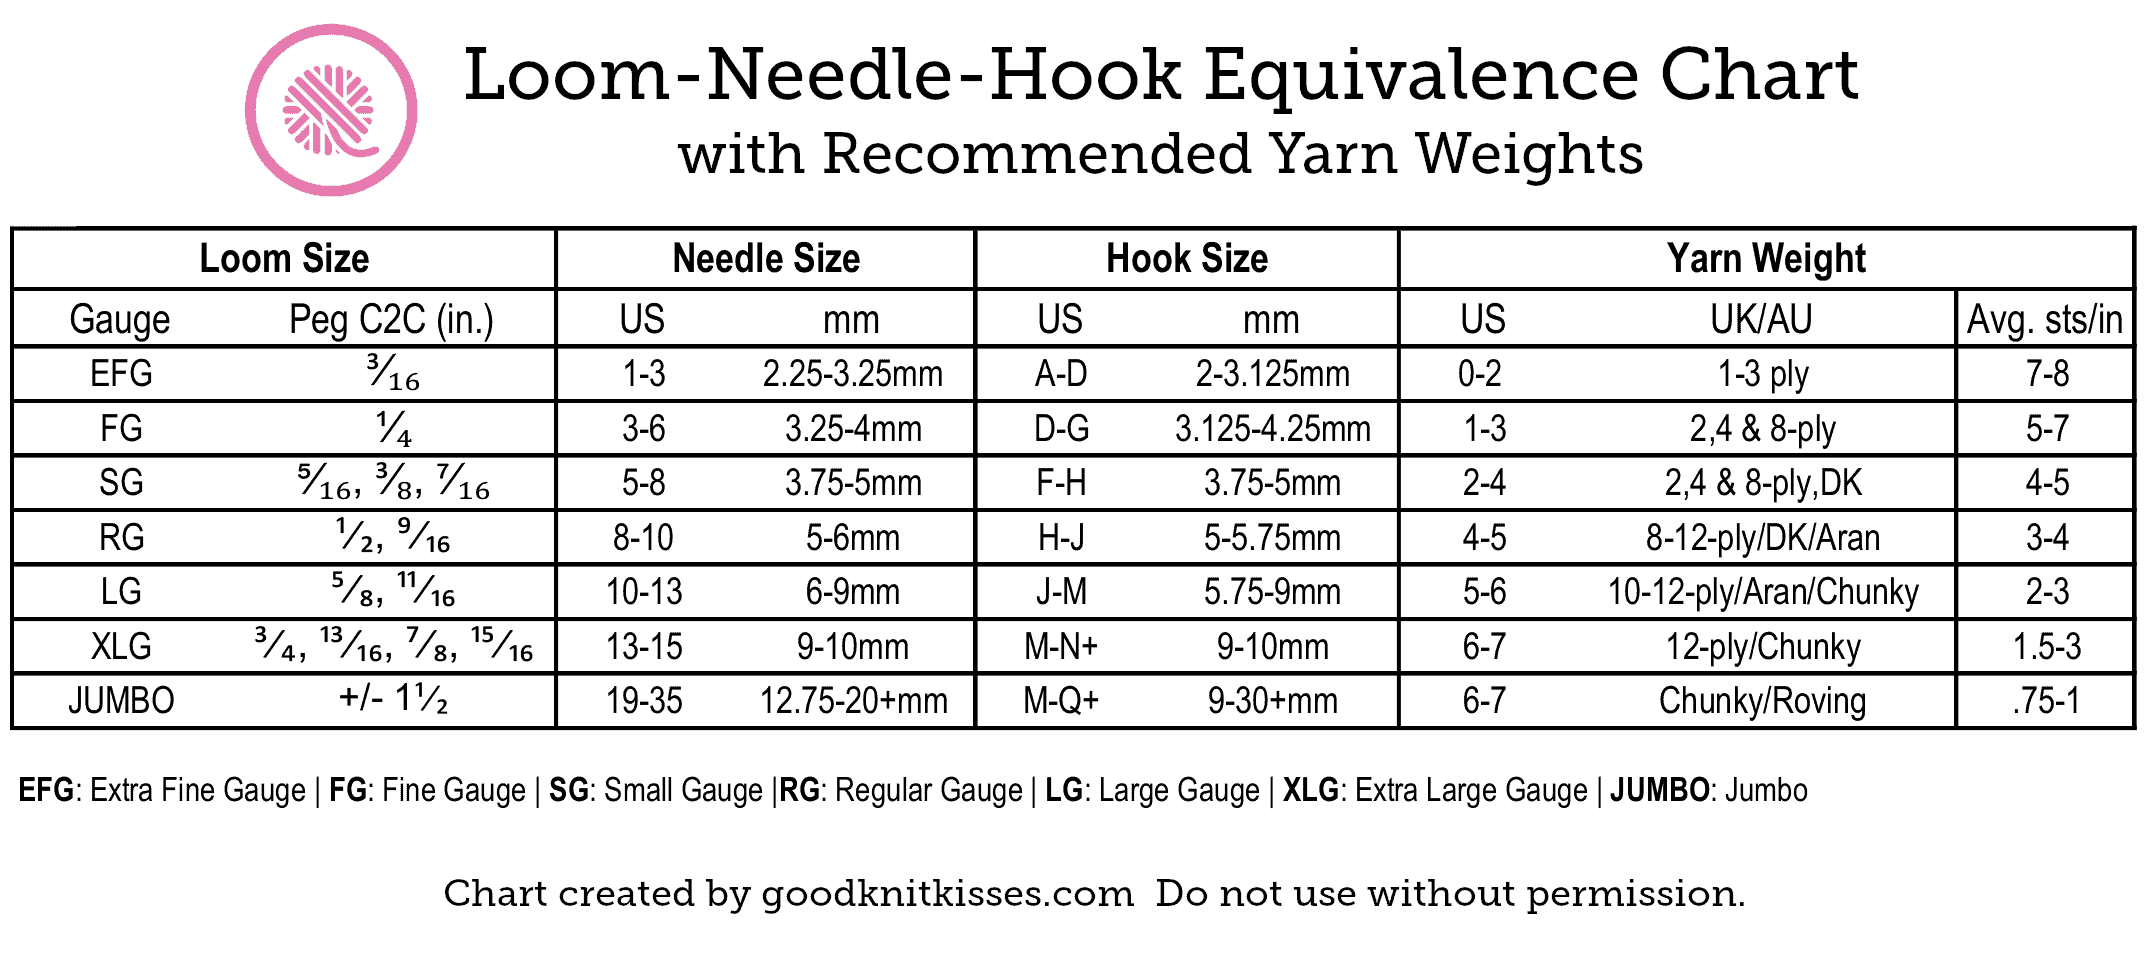 Knitting Board Sock Loom 2 Regular Gauge